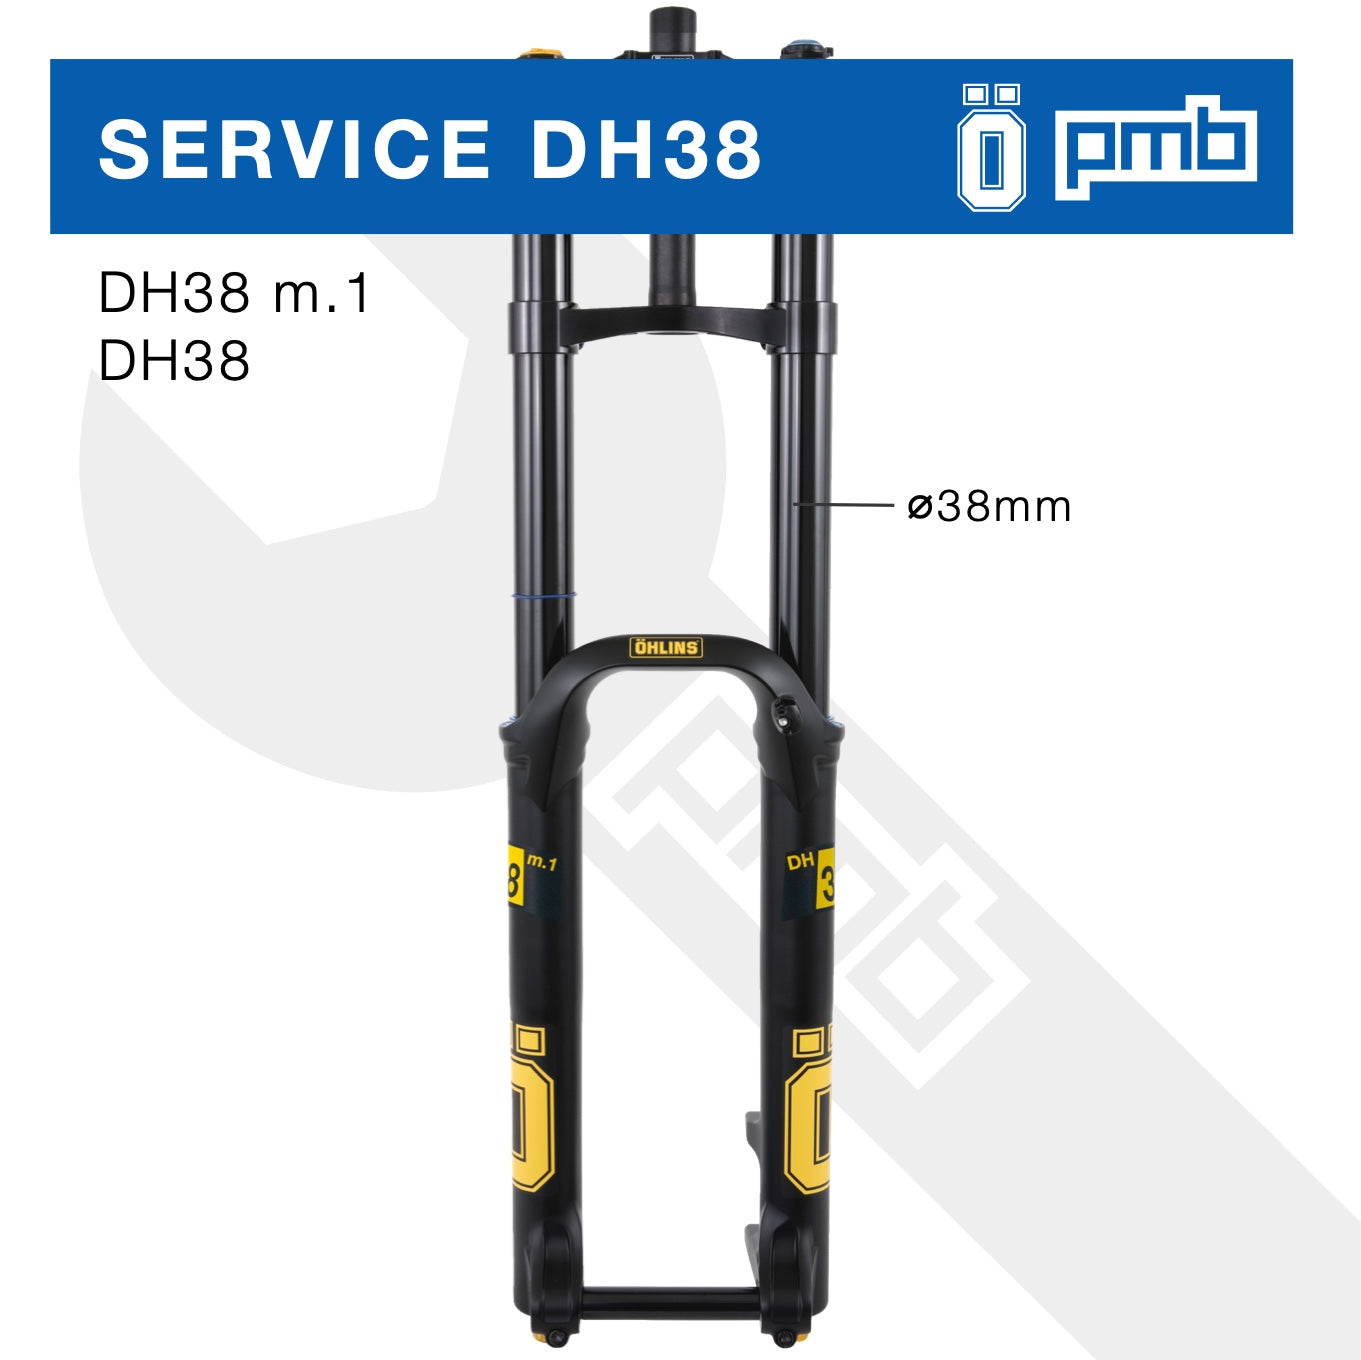 Öhlins DH38 m.1 / DH38 Service